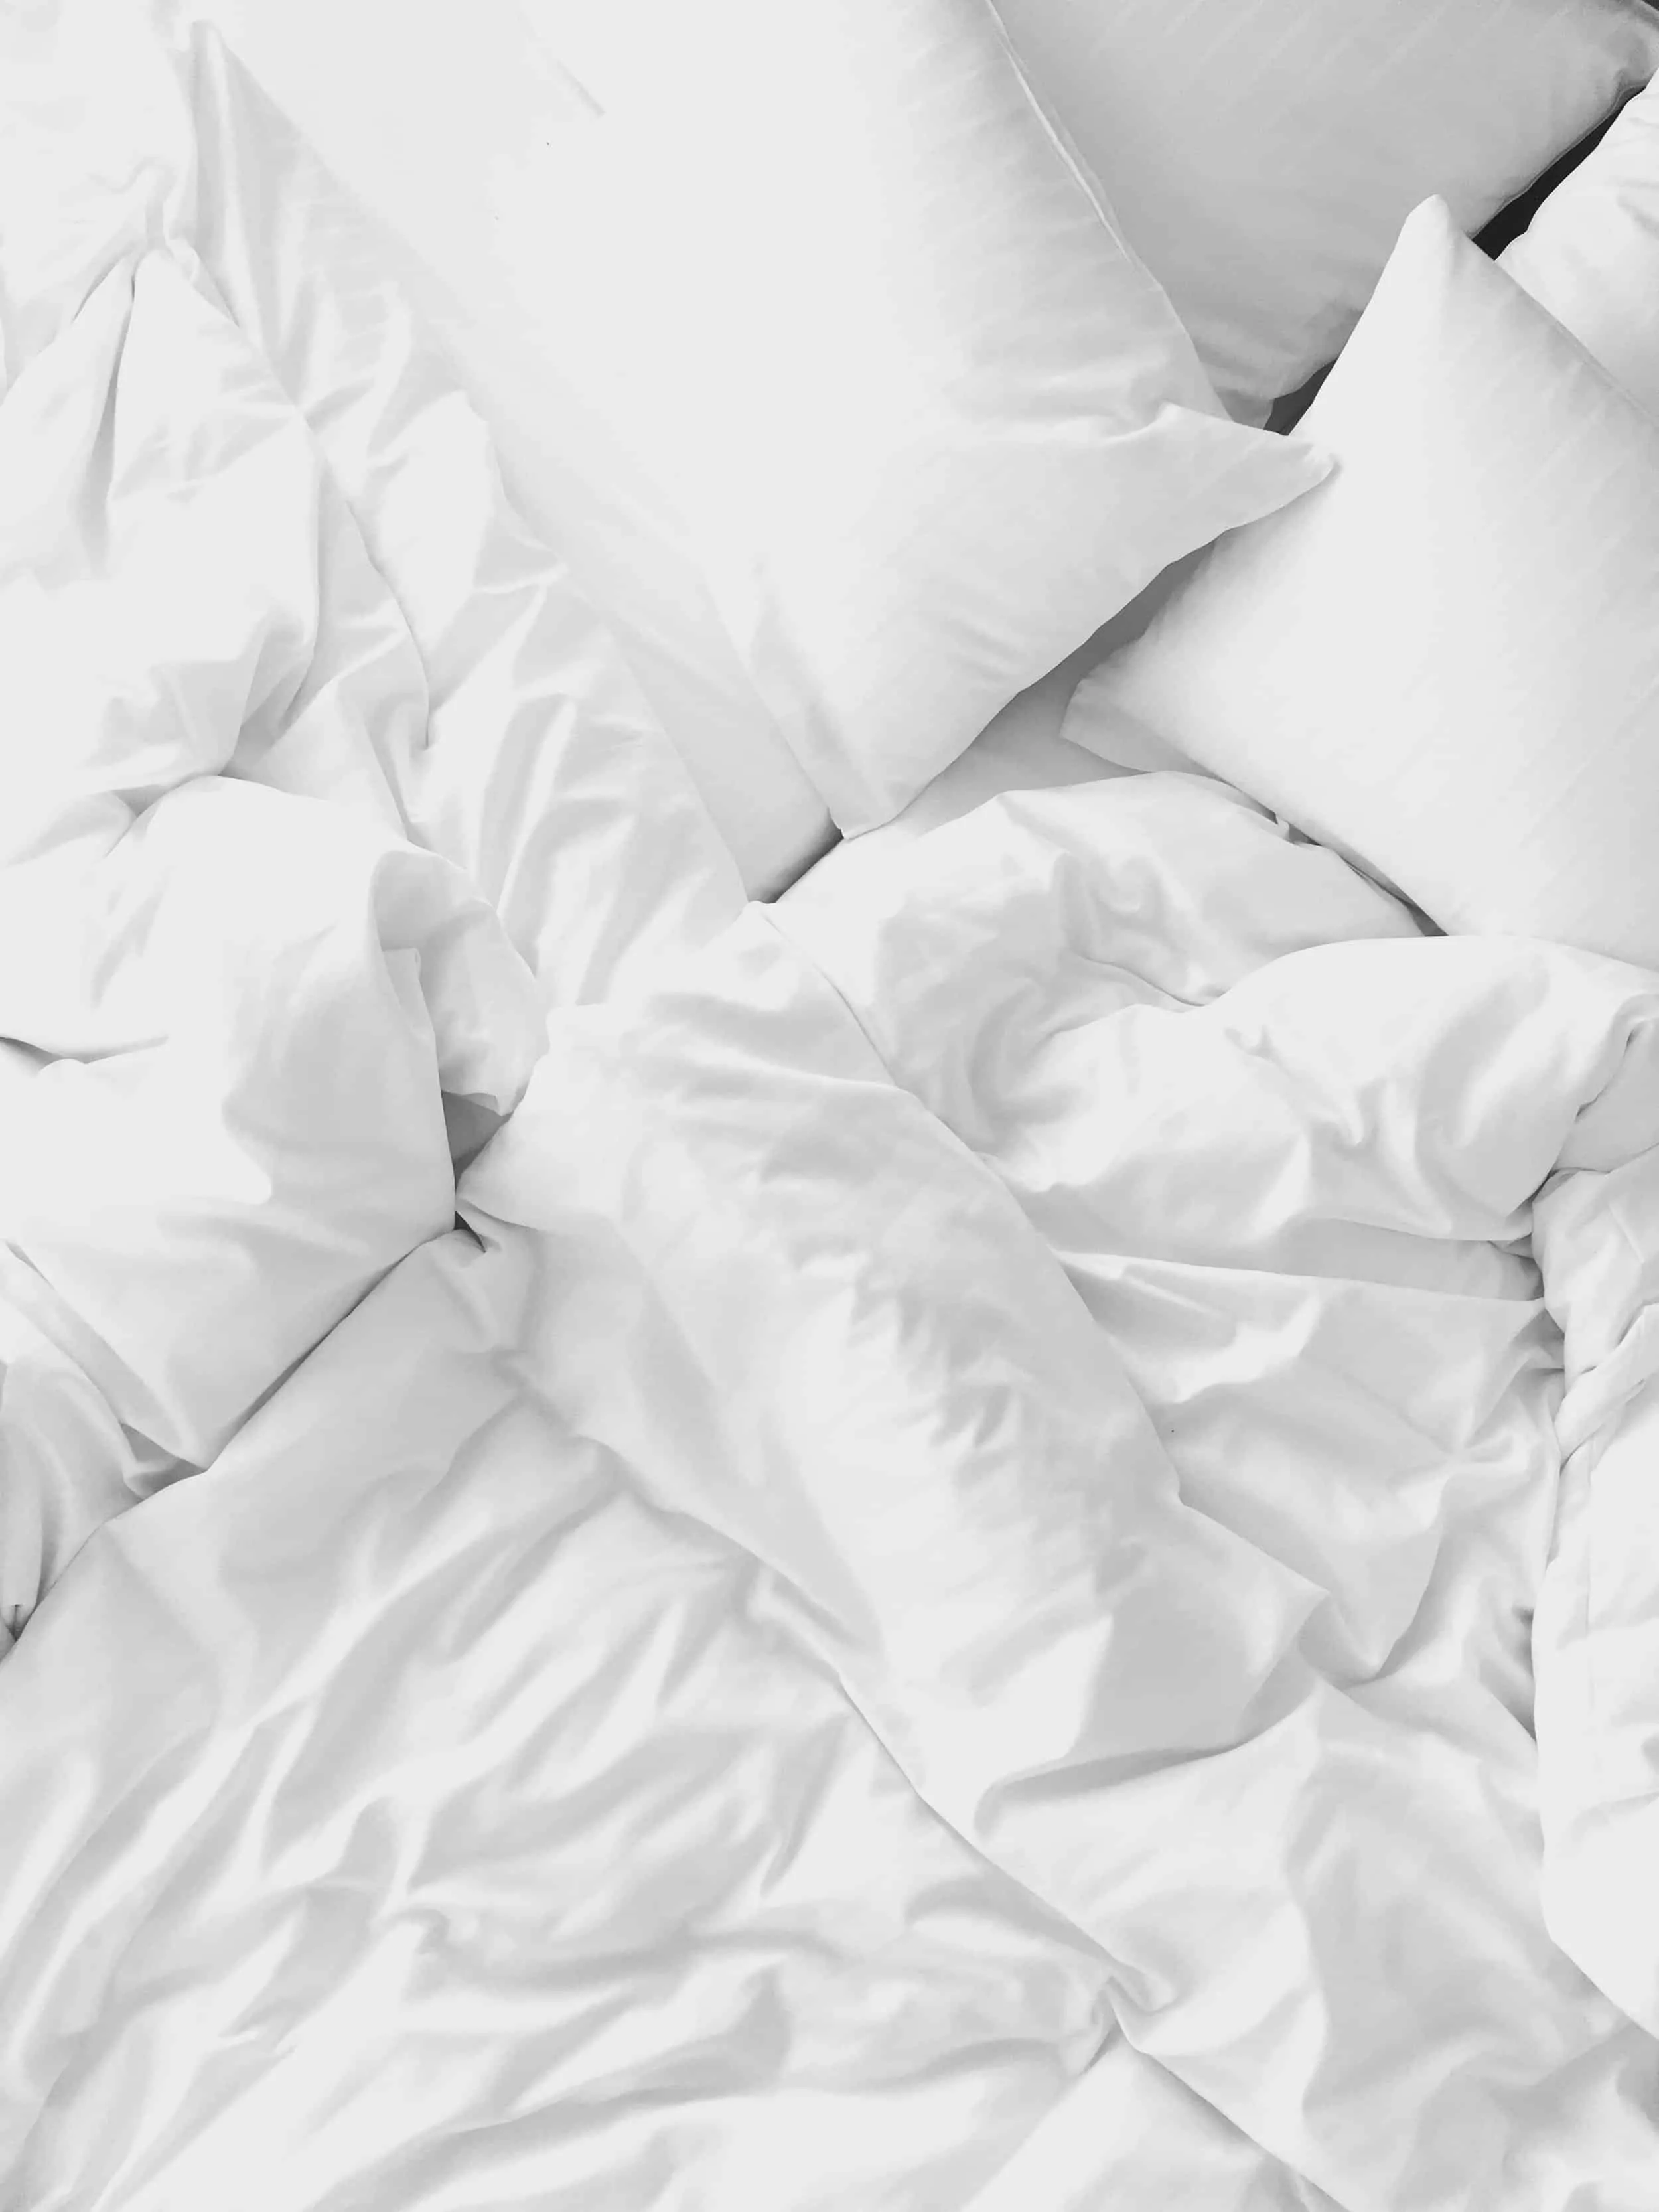 improving sleep hygiene requires good bedding